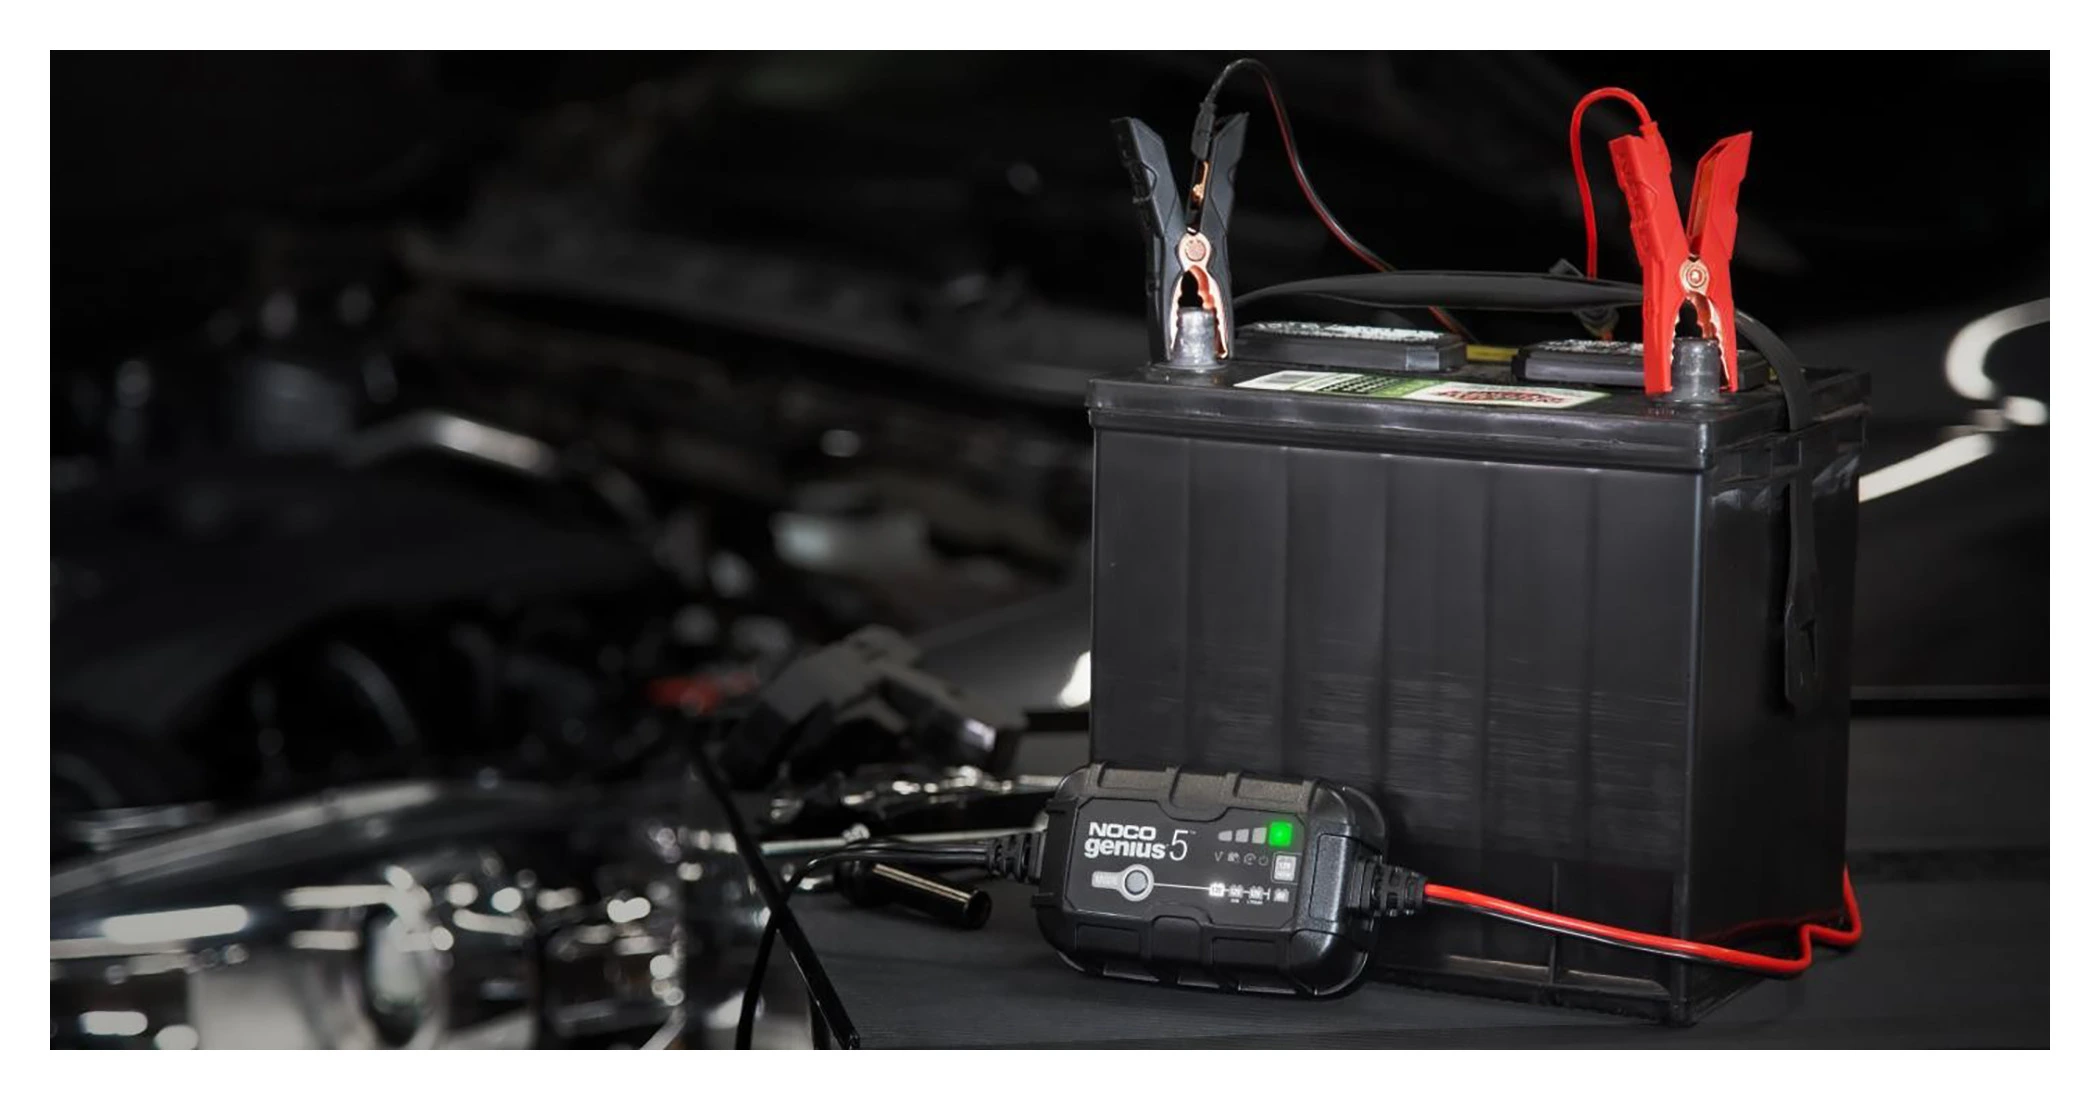 NOCO Genius5 automatisches Batterieladegerät 6V / 12V